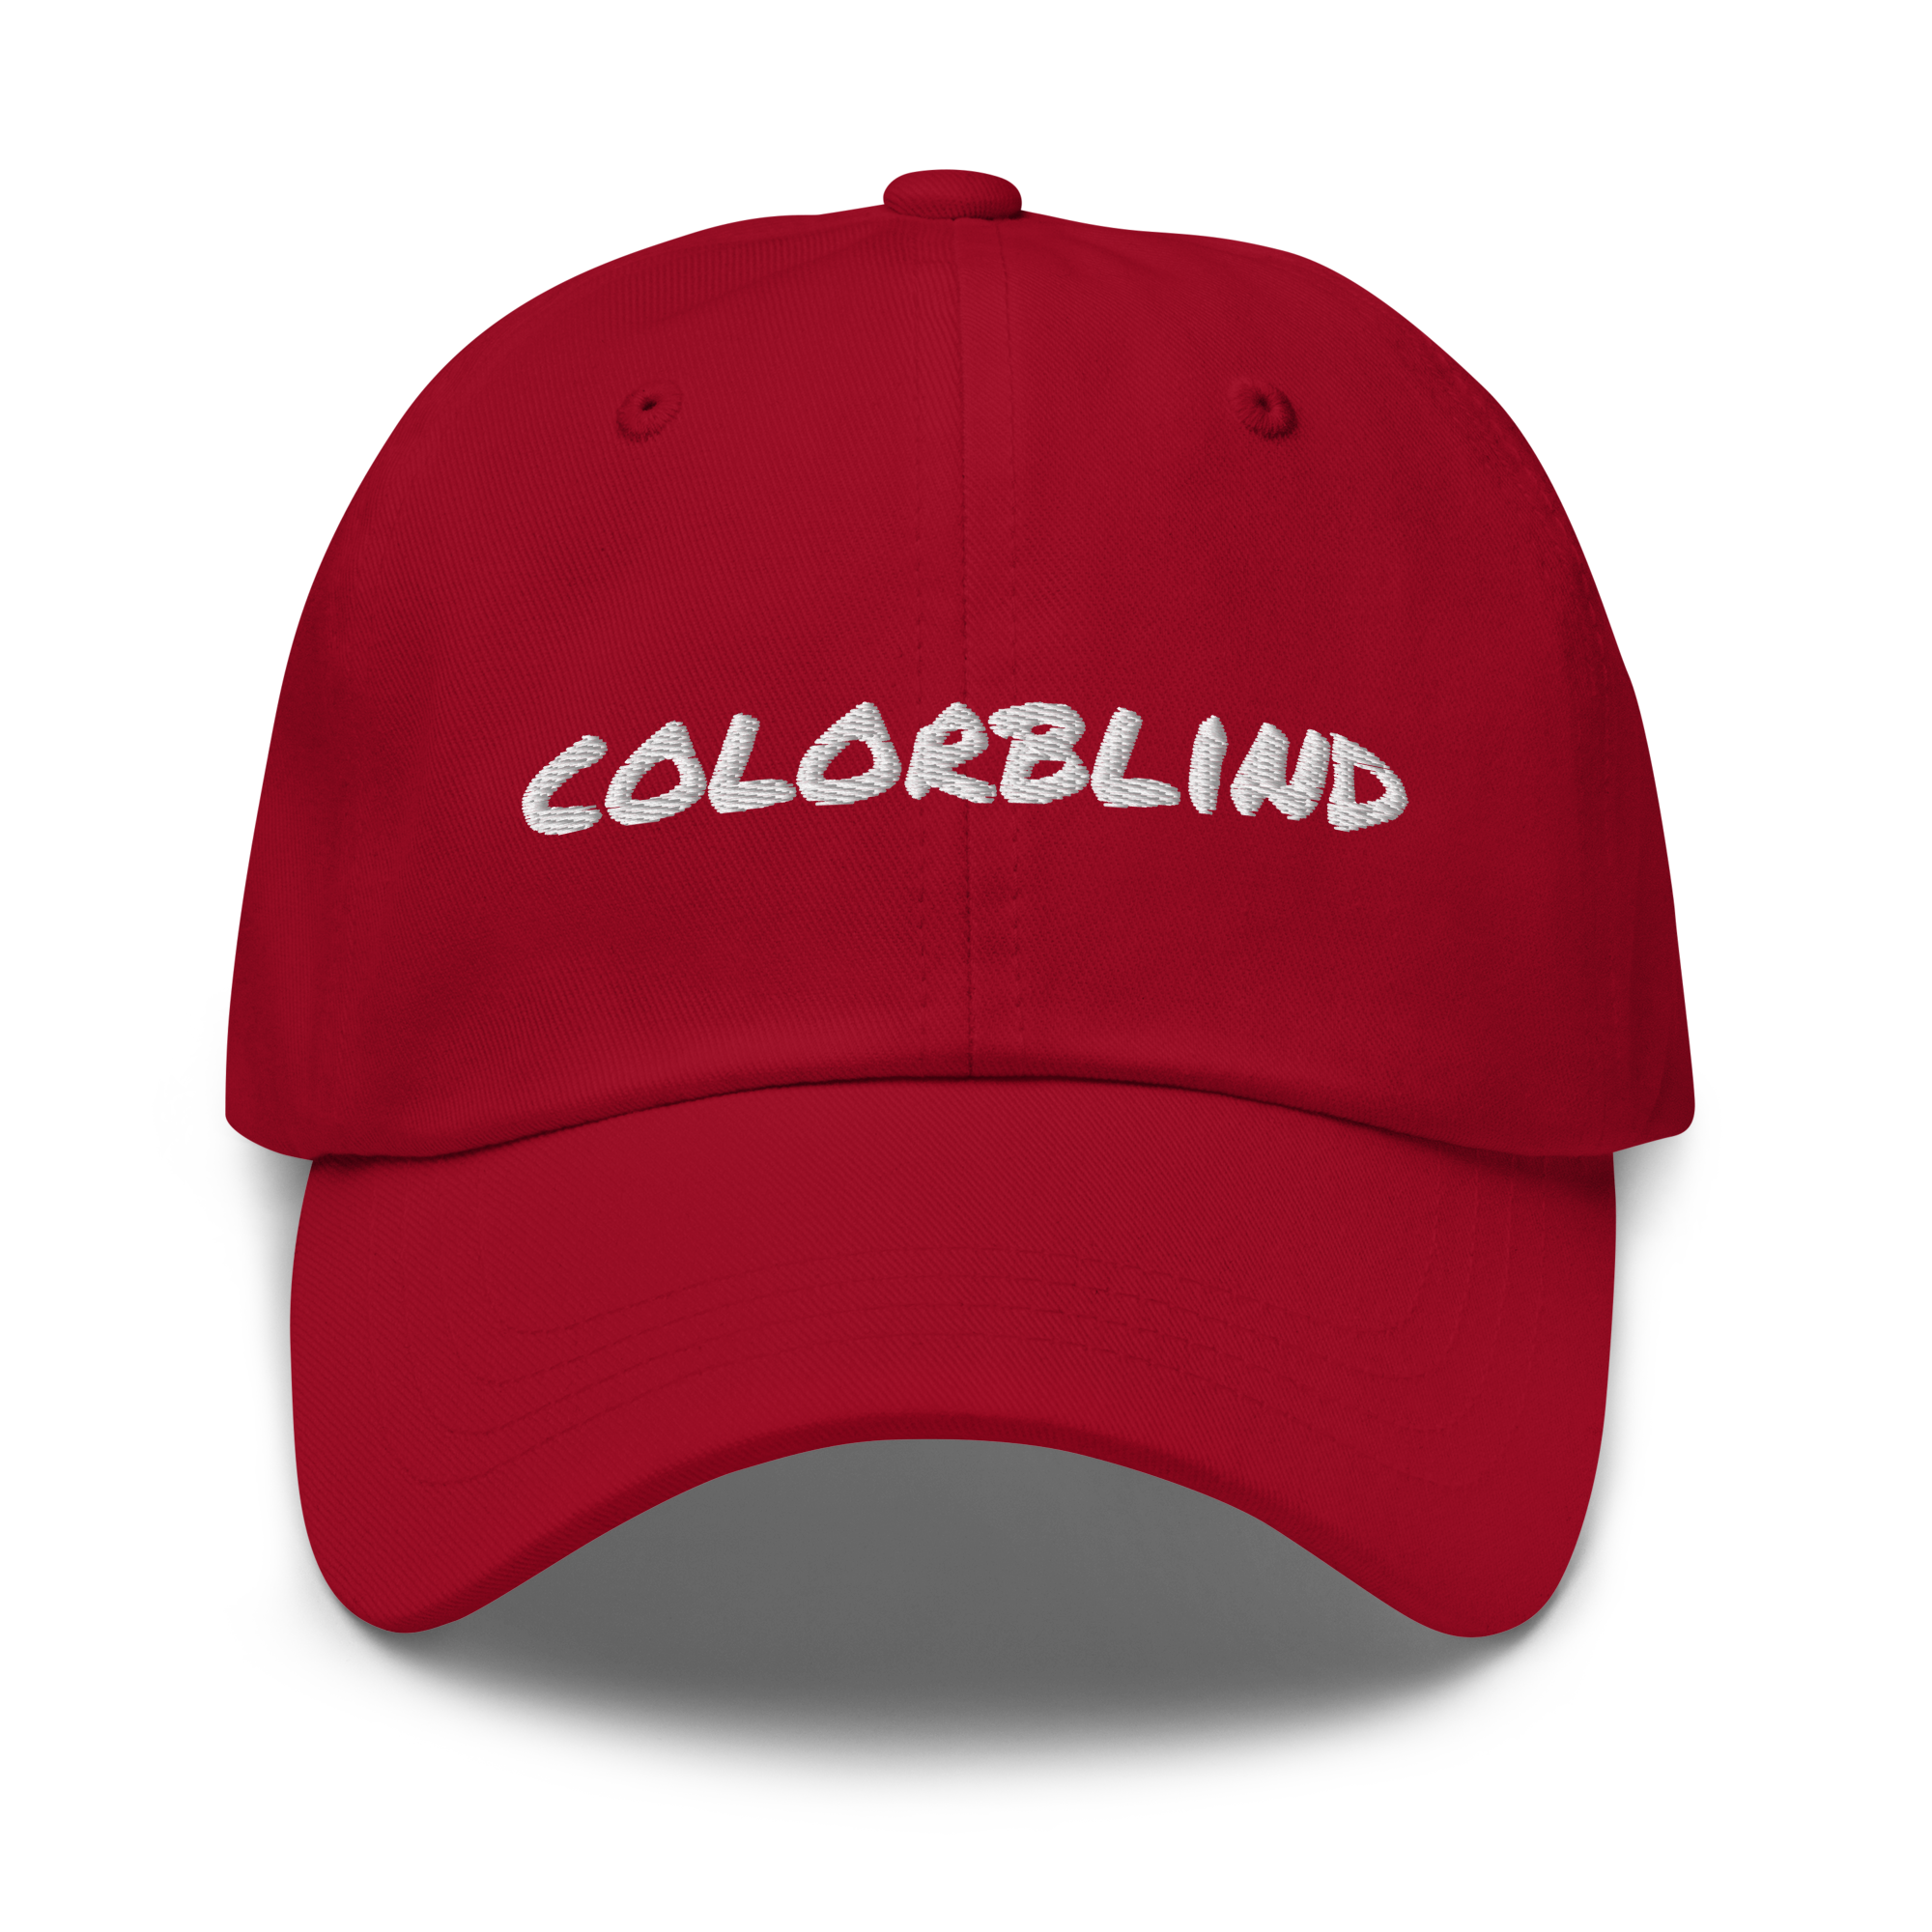 Colorblind hat